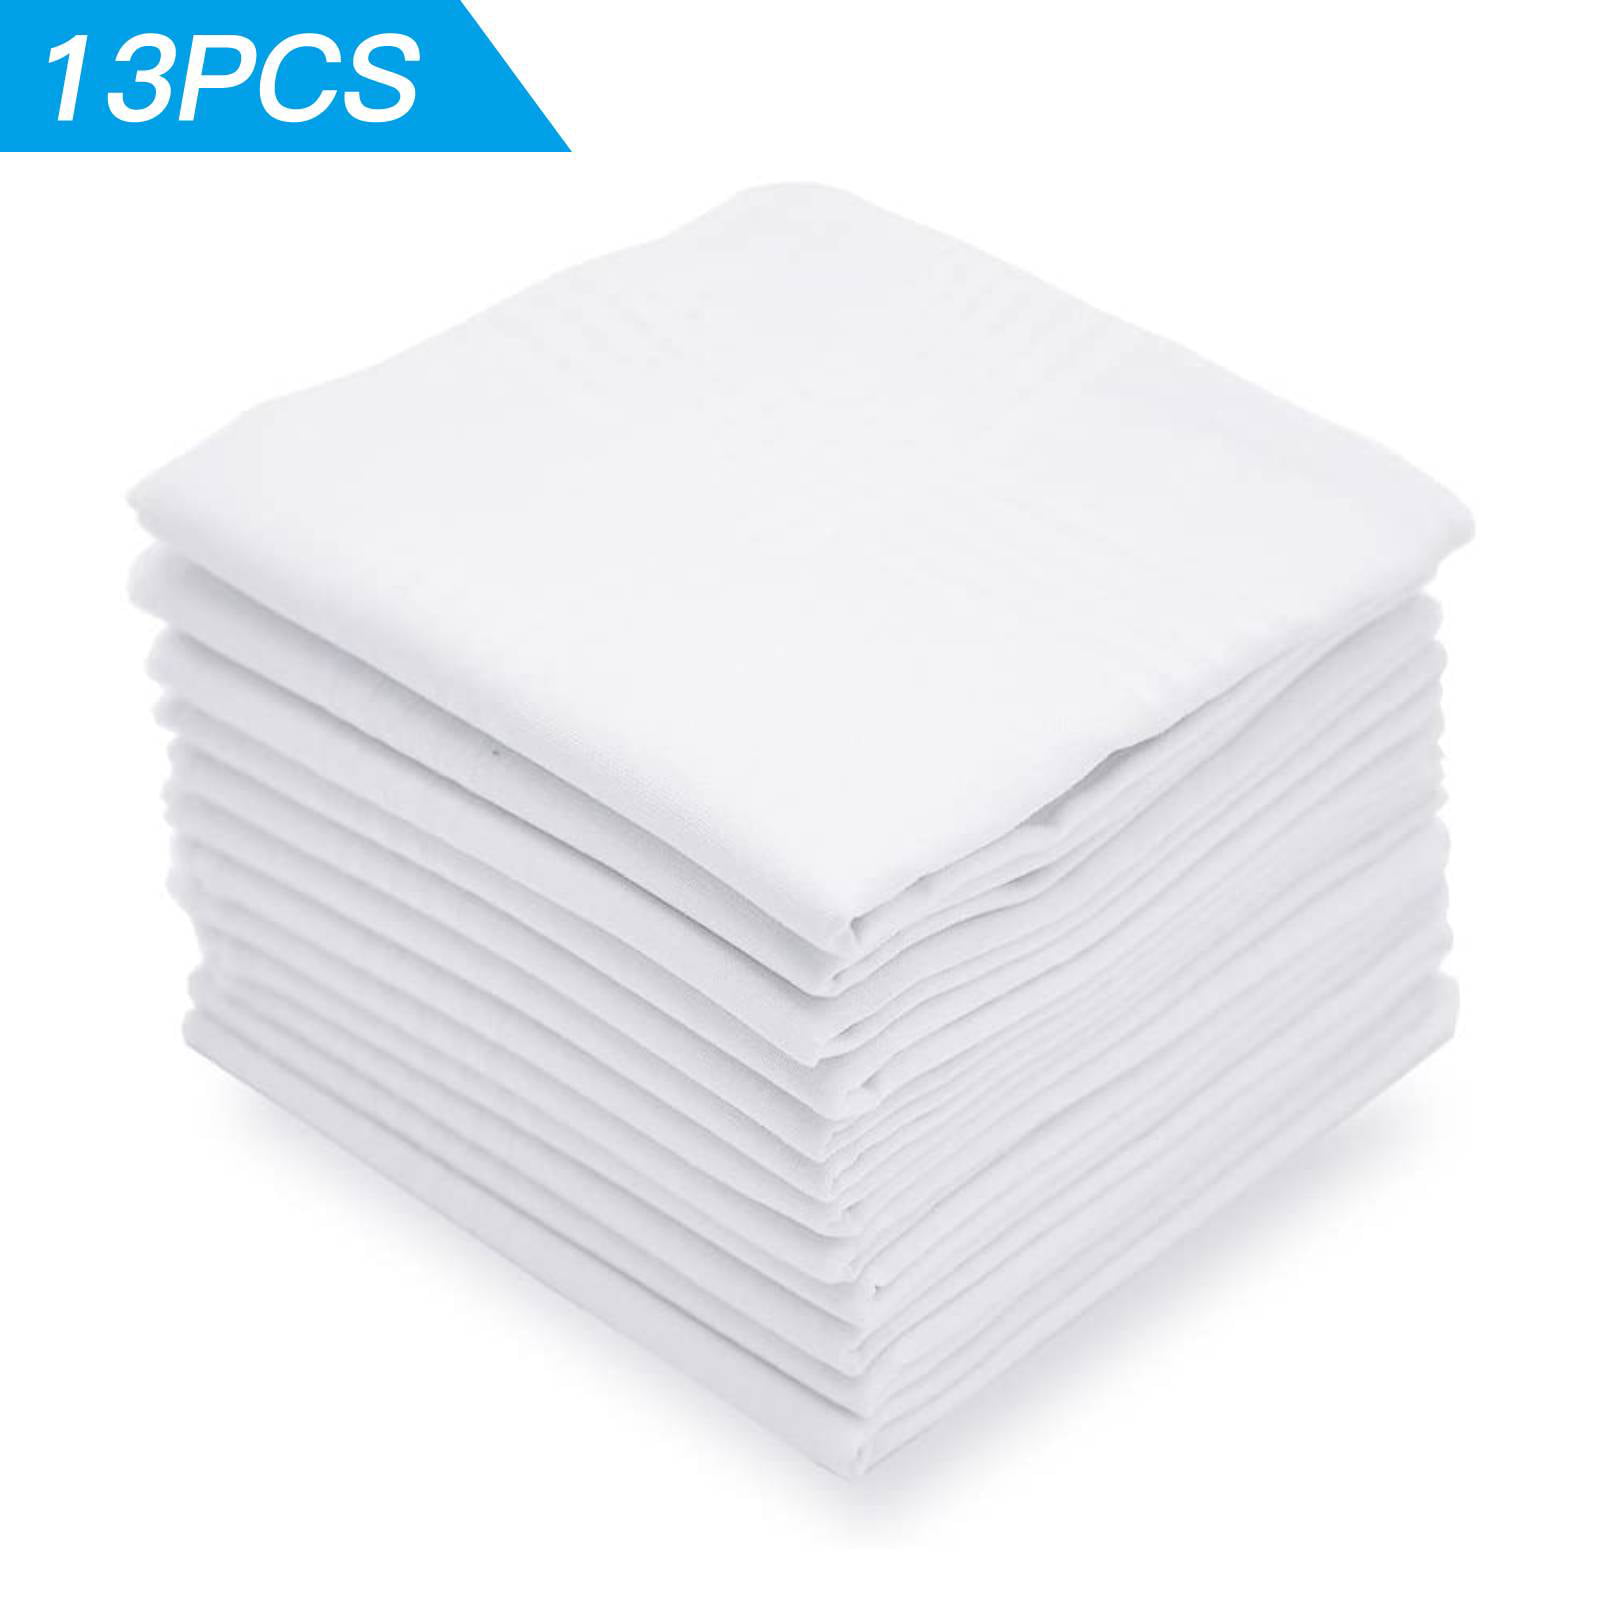 Men's White 100% Cotton Stylish Hanky Handkerchiefs Gift Set 3 PACK 